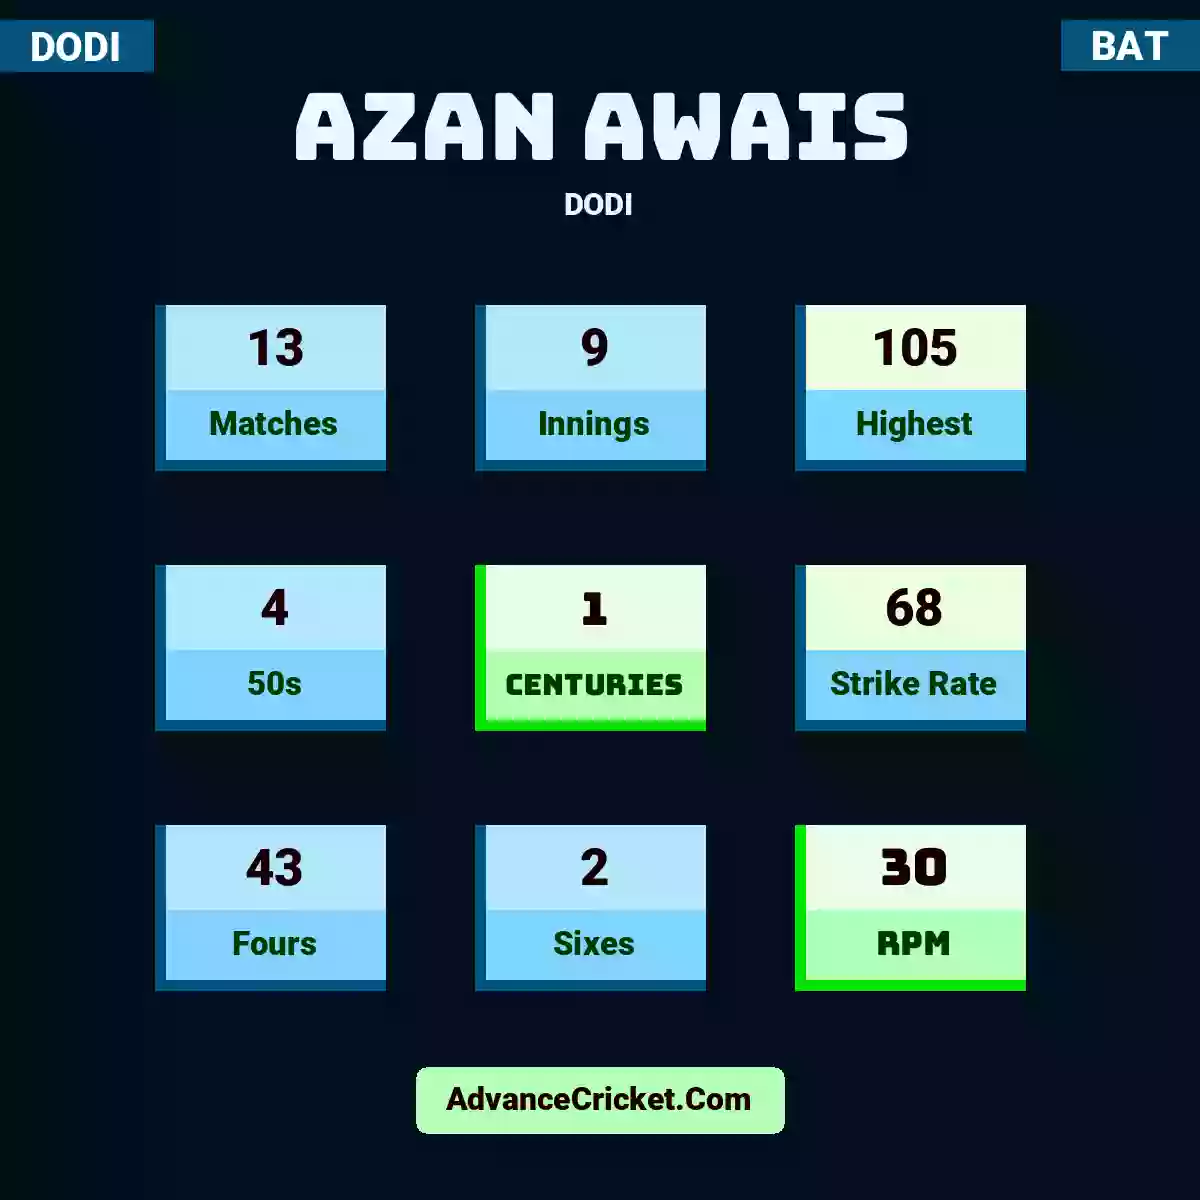 Azan Awais DODI , Azan Awais played 13 matches, scored 105 runs as highest, 4 half-centuries, and 1 centuries, with a strike rate of 68. A.Awais hit 43 fours and 2 sixes, with an RPM of 30.